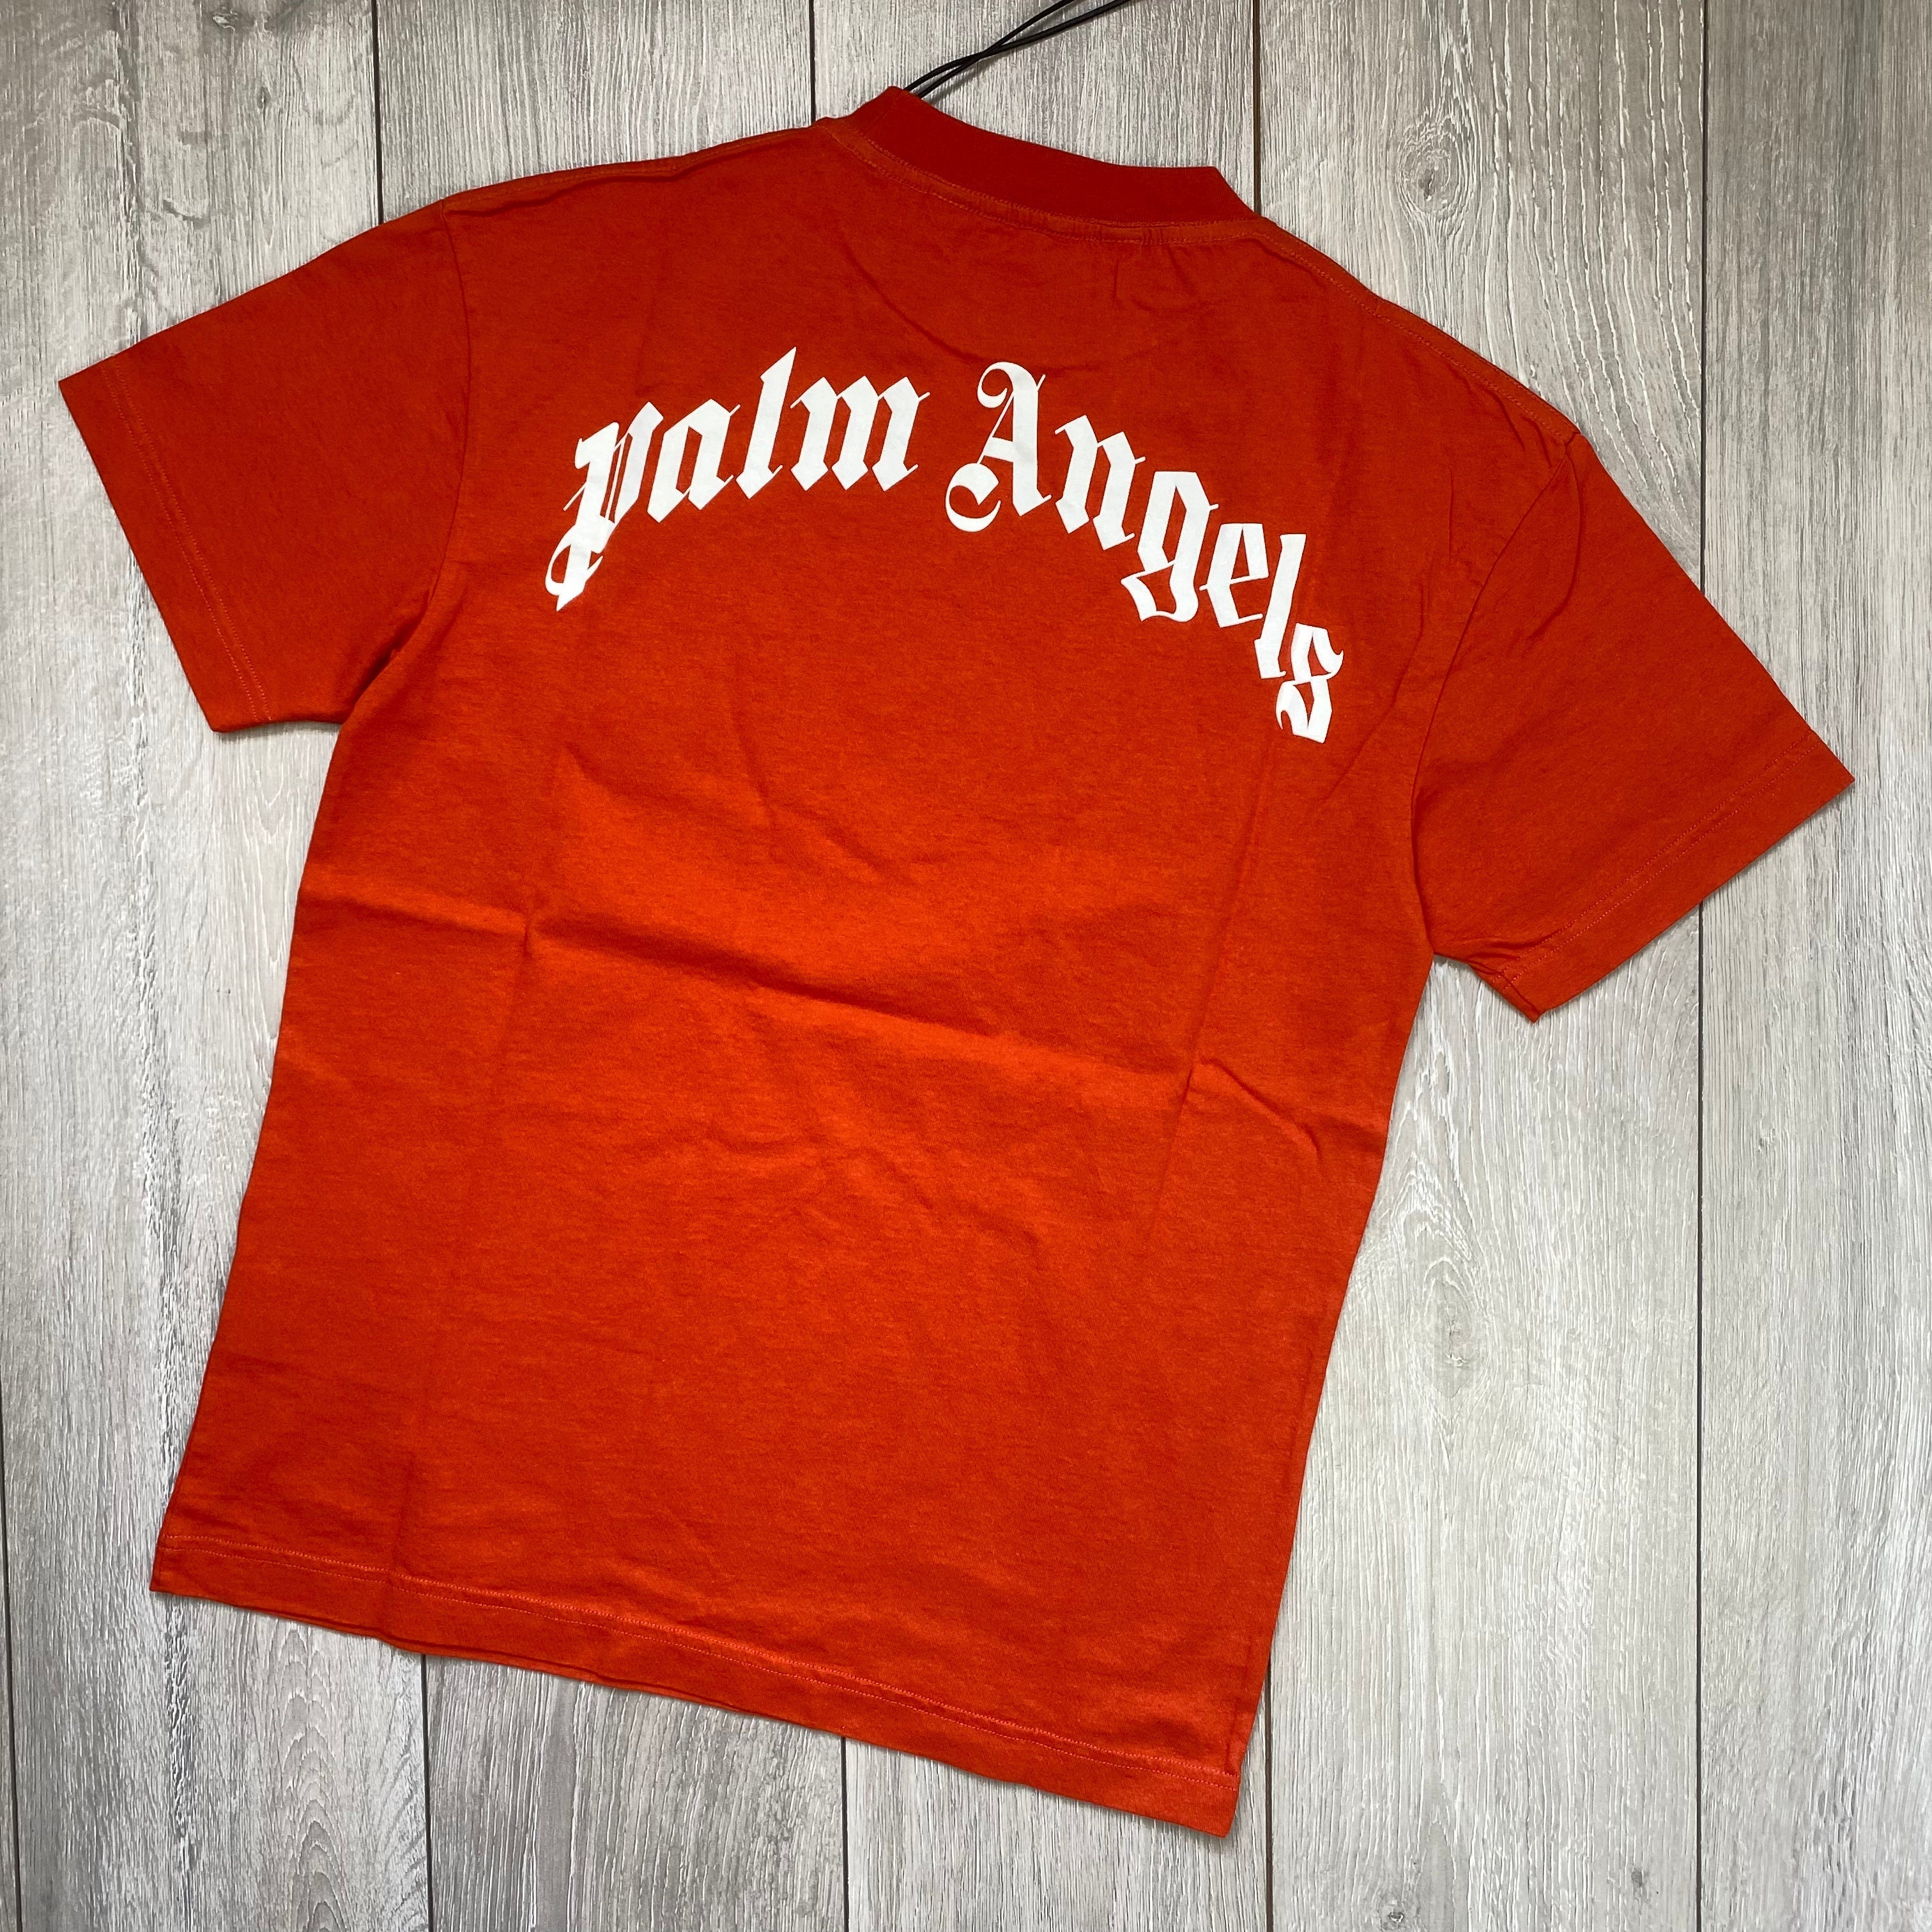 Palm Angels Kill The Bear T-Shirt